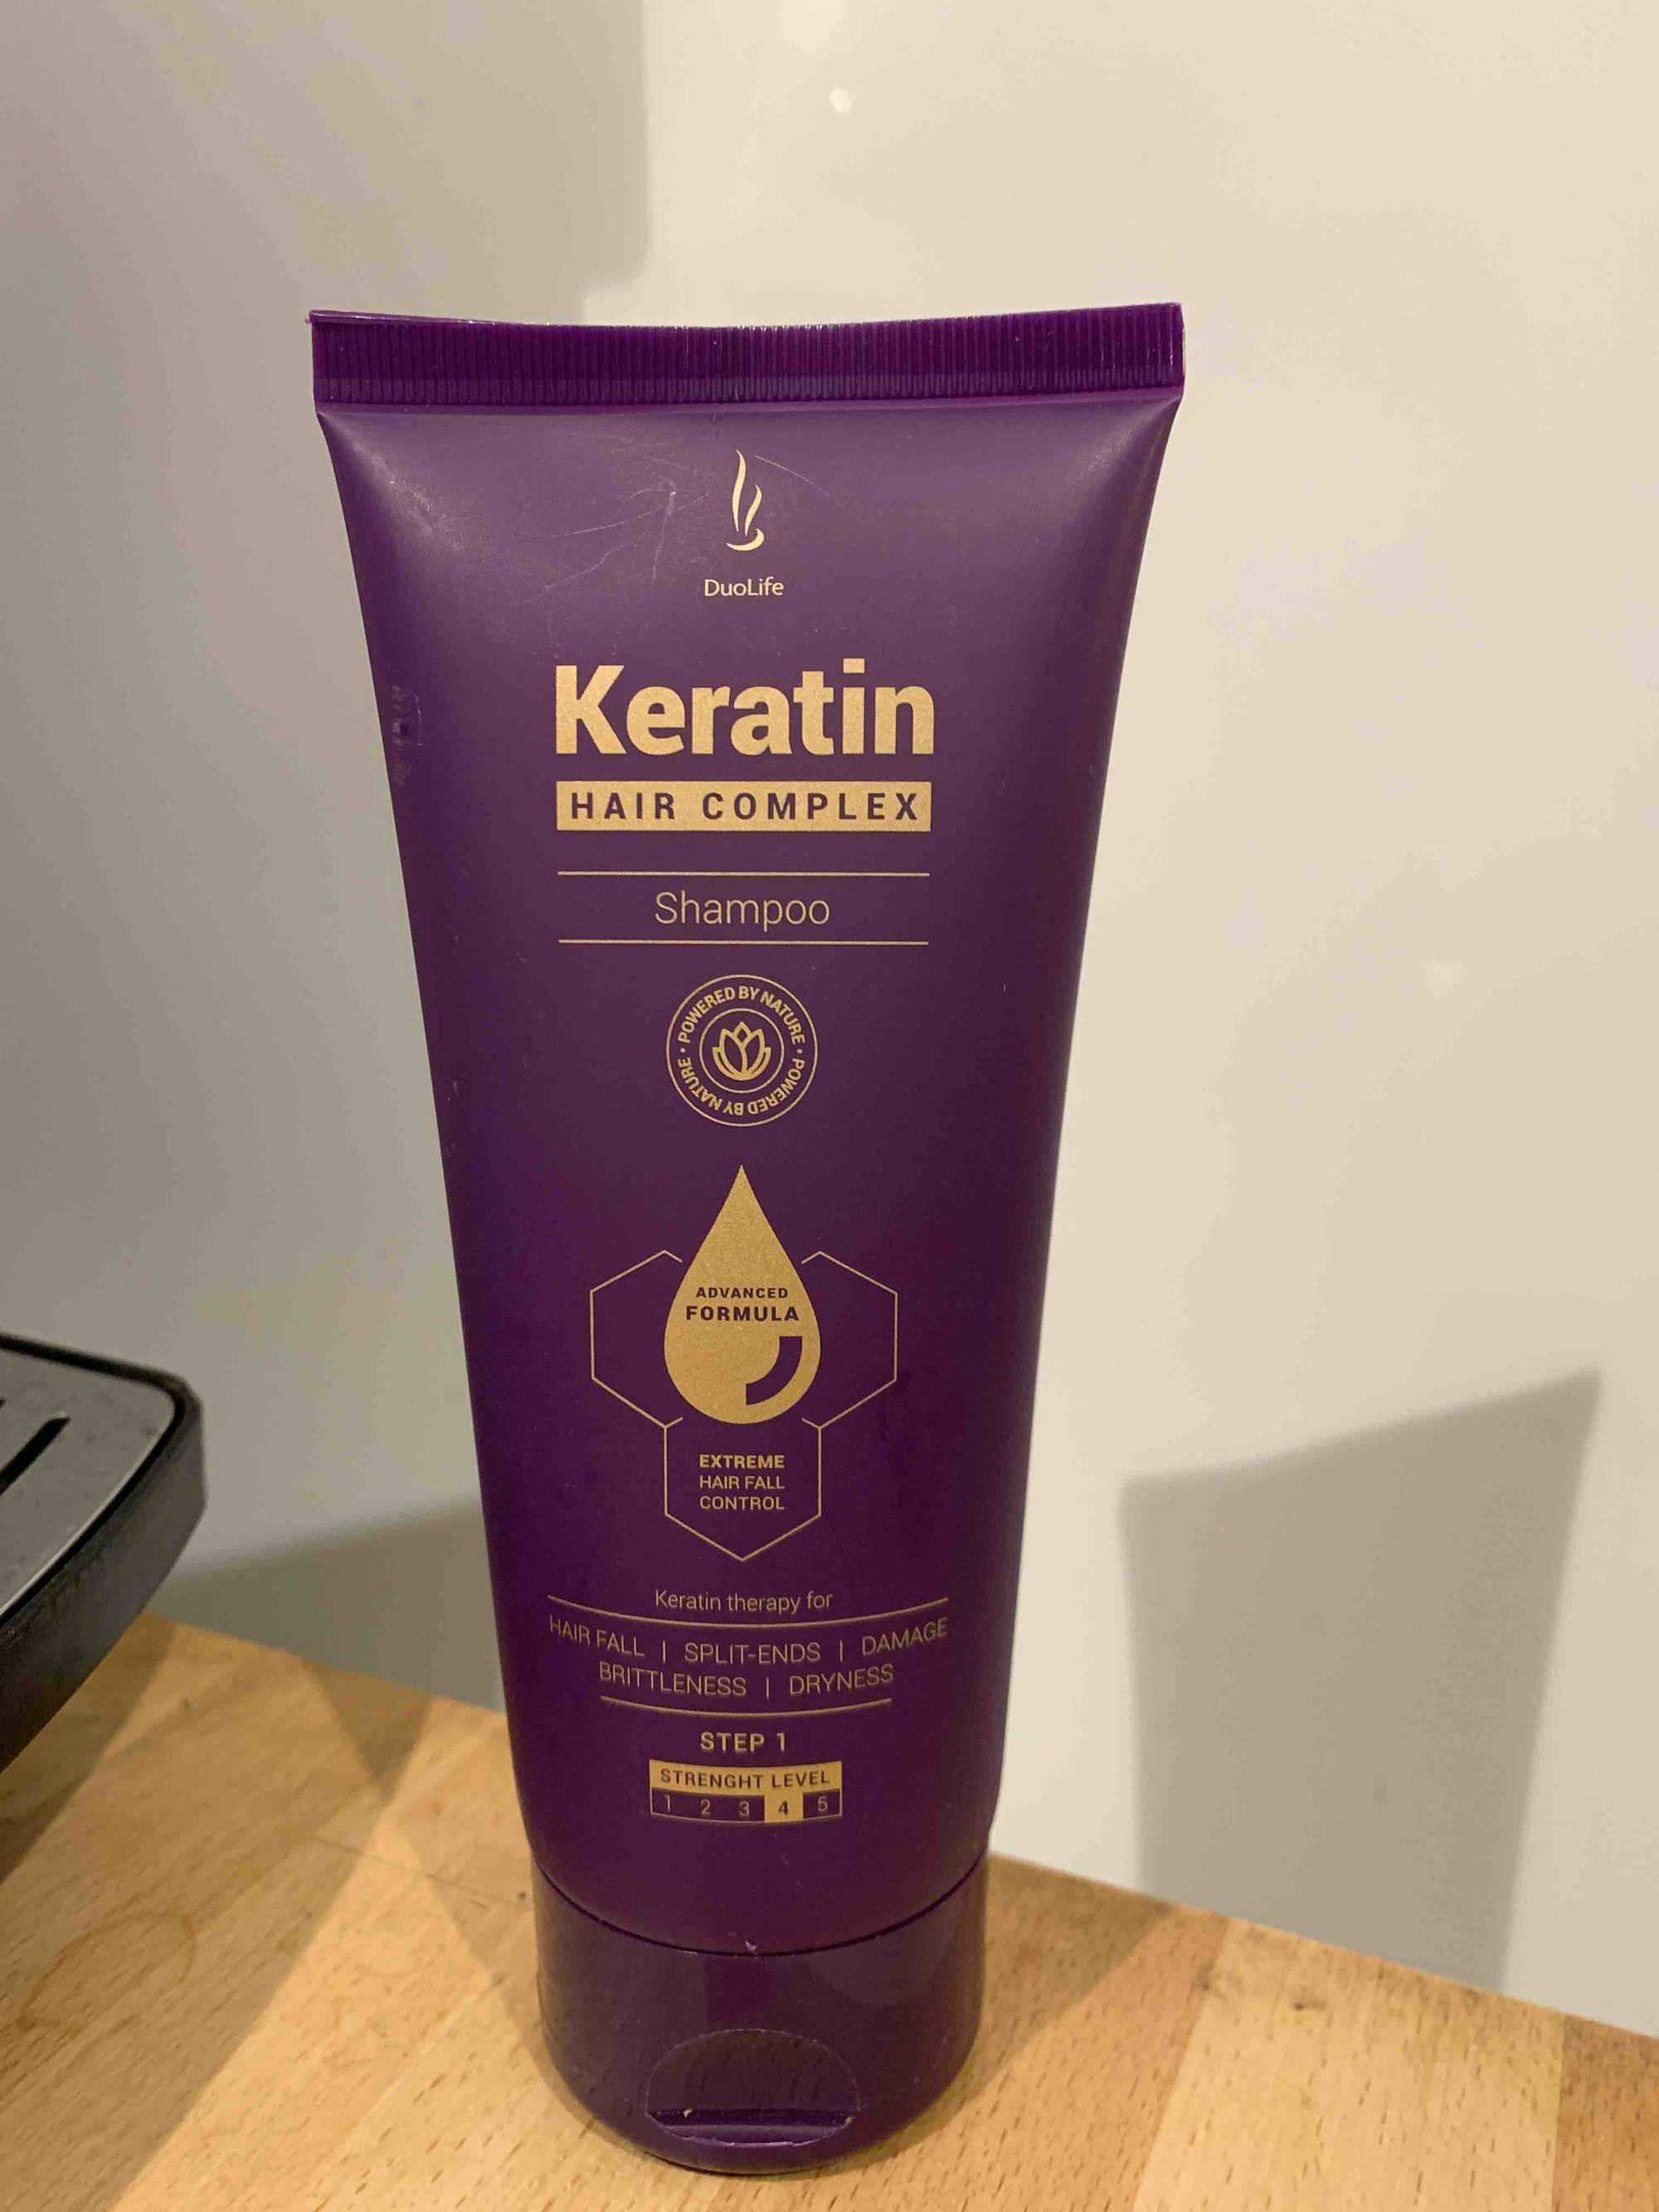 DUOLIFE - Keratin hair complex - Shampoo